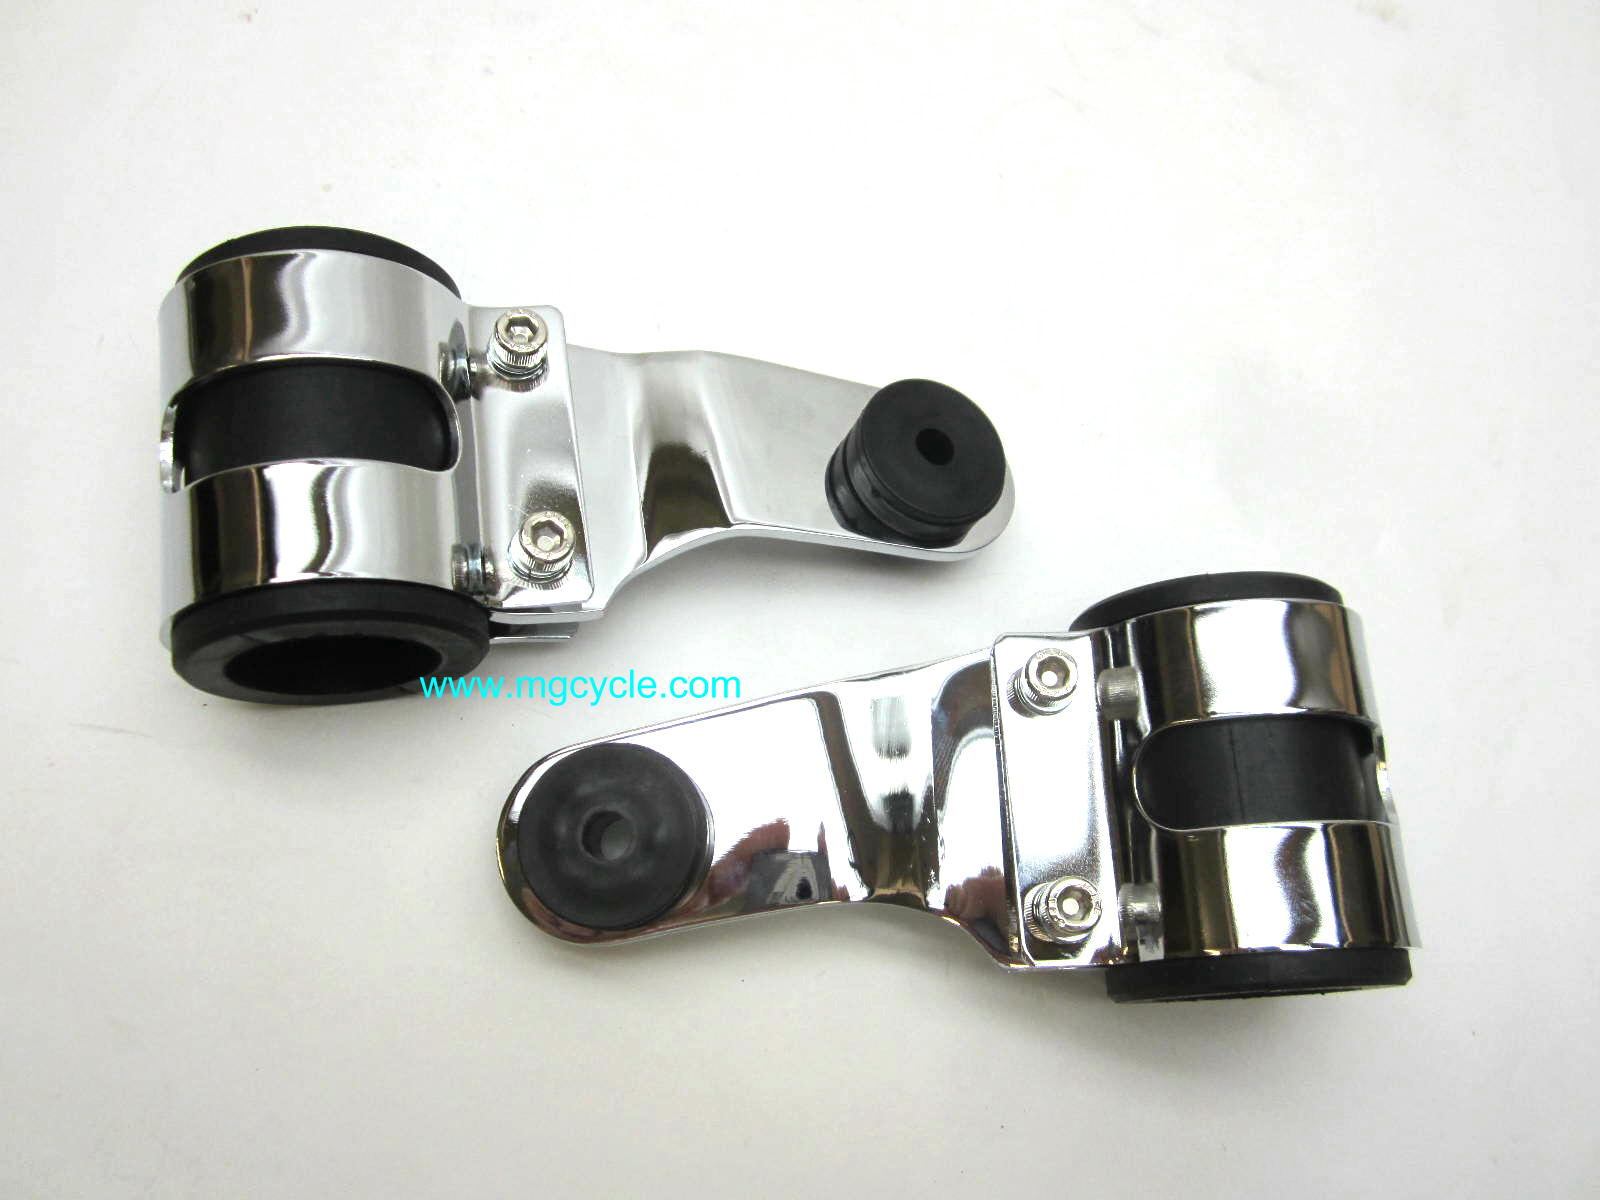 Euro-style headlight mounting brackets, 35mm-41mm